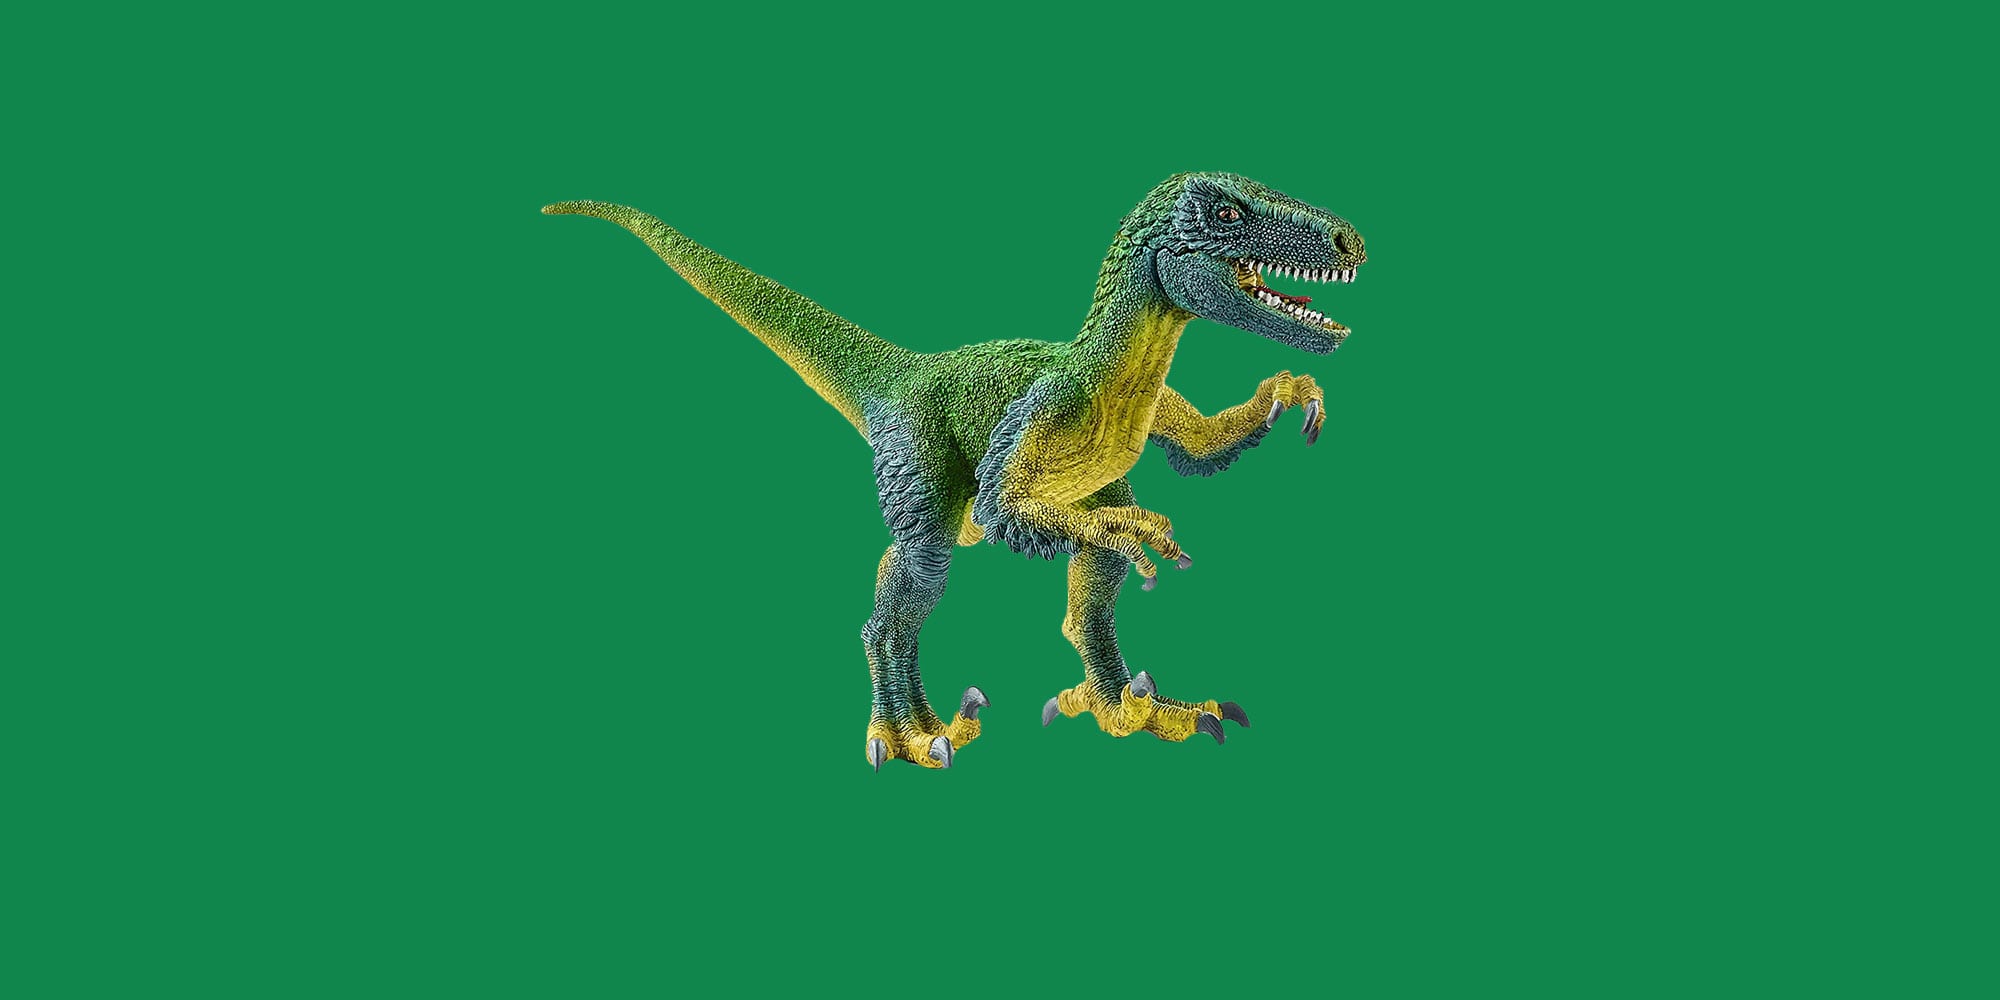 Transforming 2 in 1 Prehistoric World Dinosaur Toy 12 Dinosaurs Figures